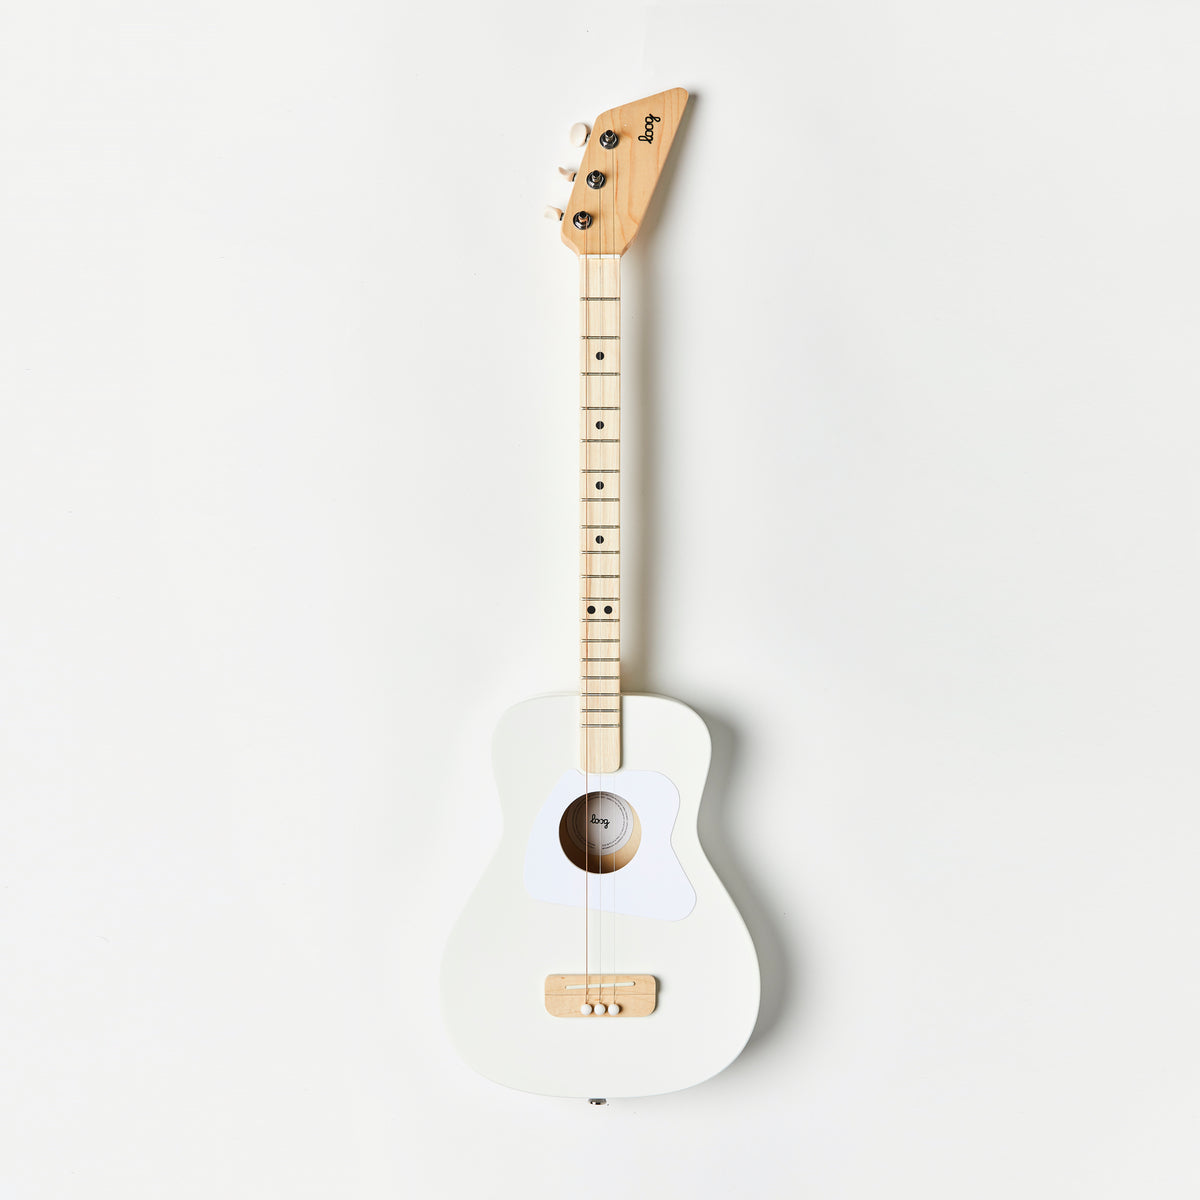 white-guitar-strap-gig-bag white-guitar-strap-wall-hanger white-guitar-strap-stand